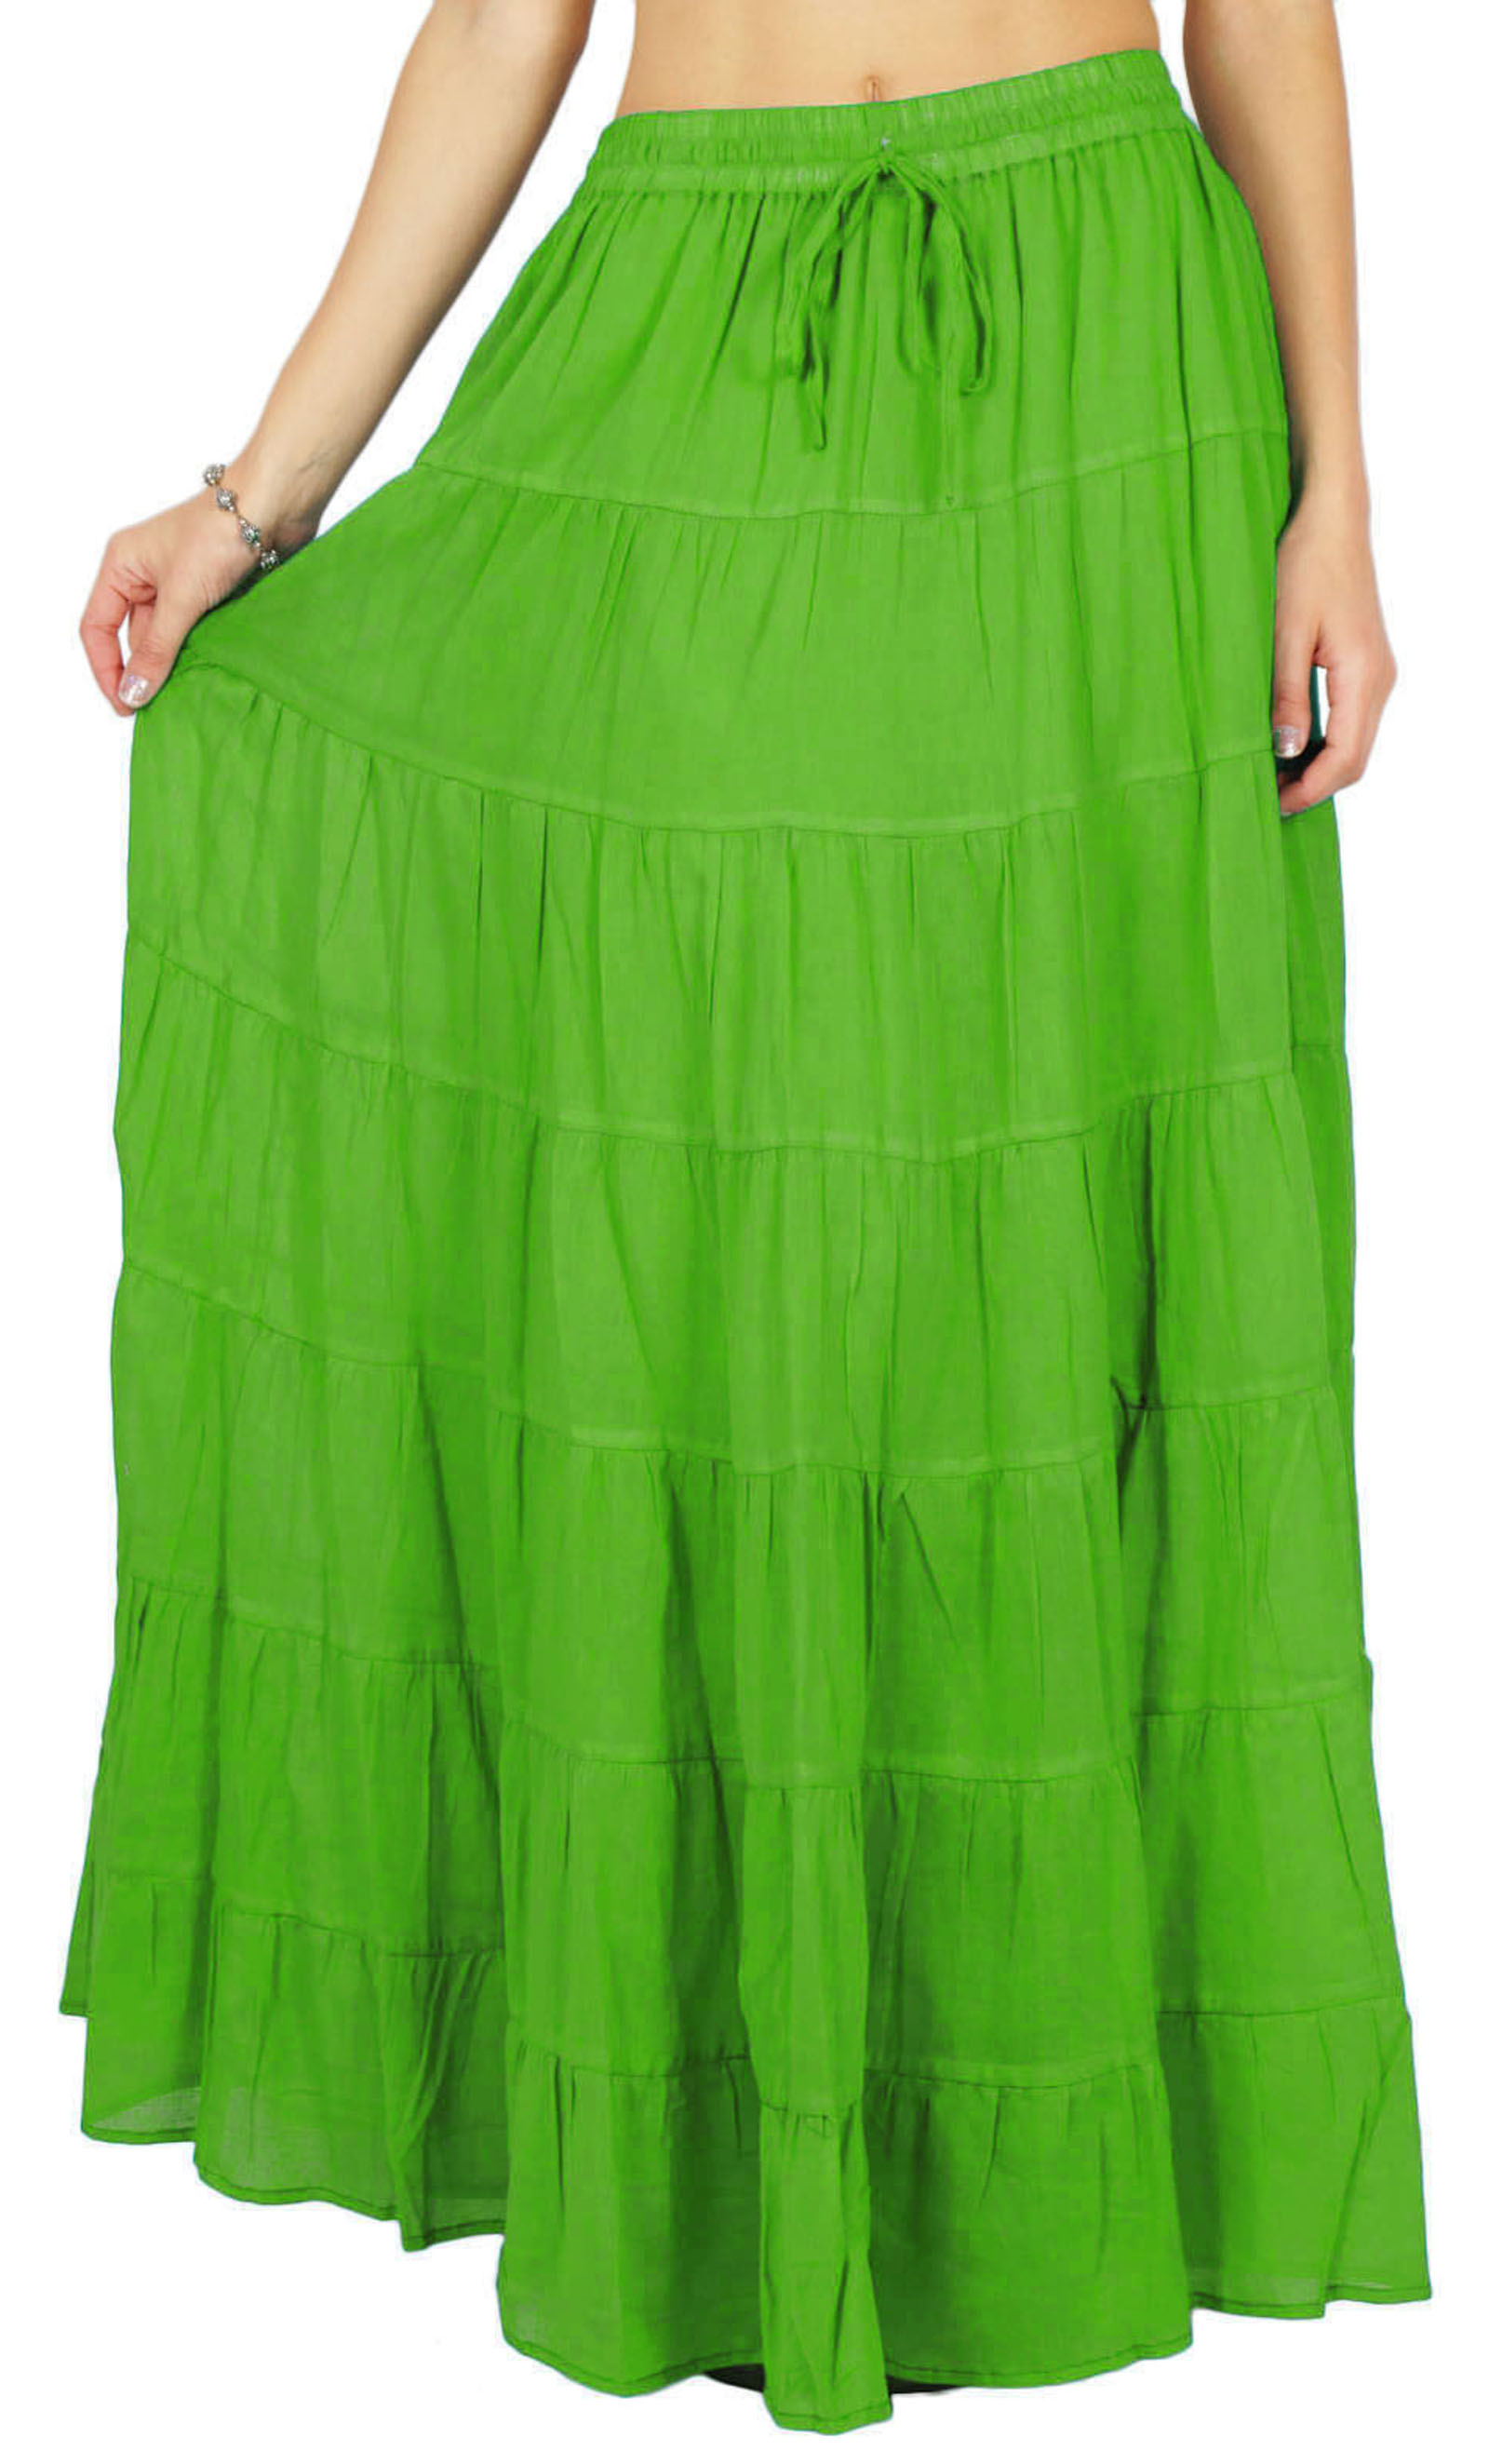 Phagun Women's Summer Cotton Teal Green Skirt Ethnic Design Drawstring ...